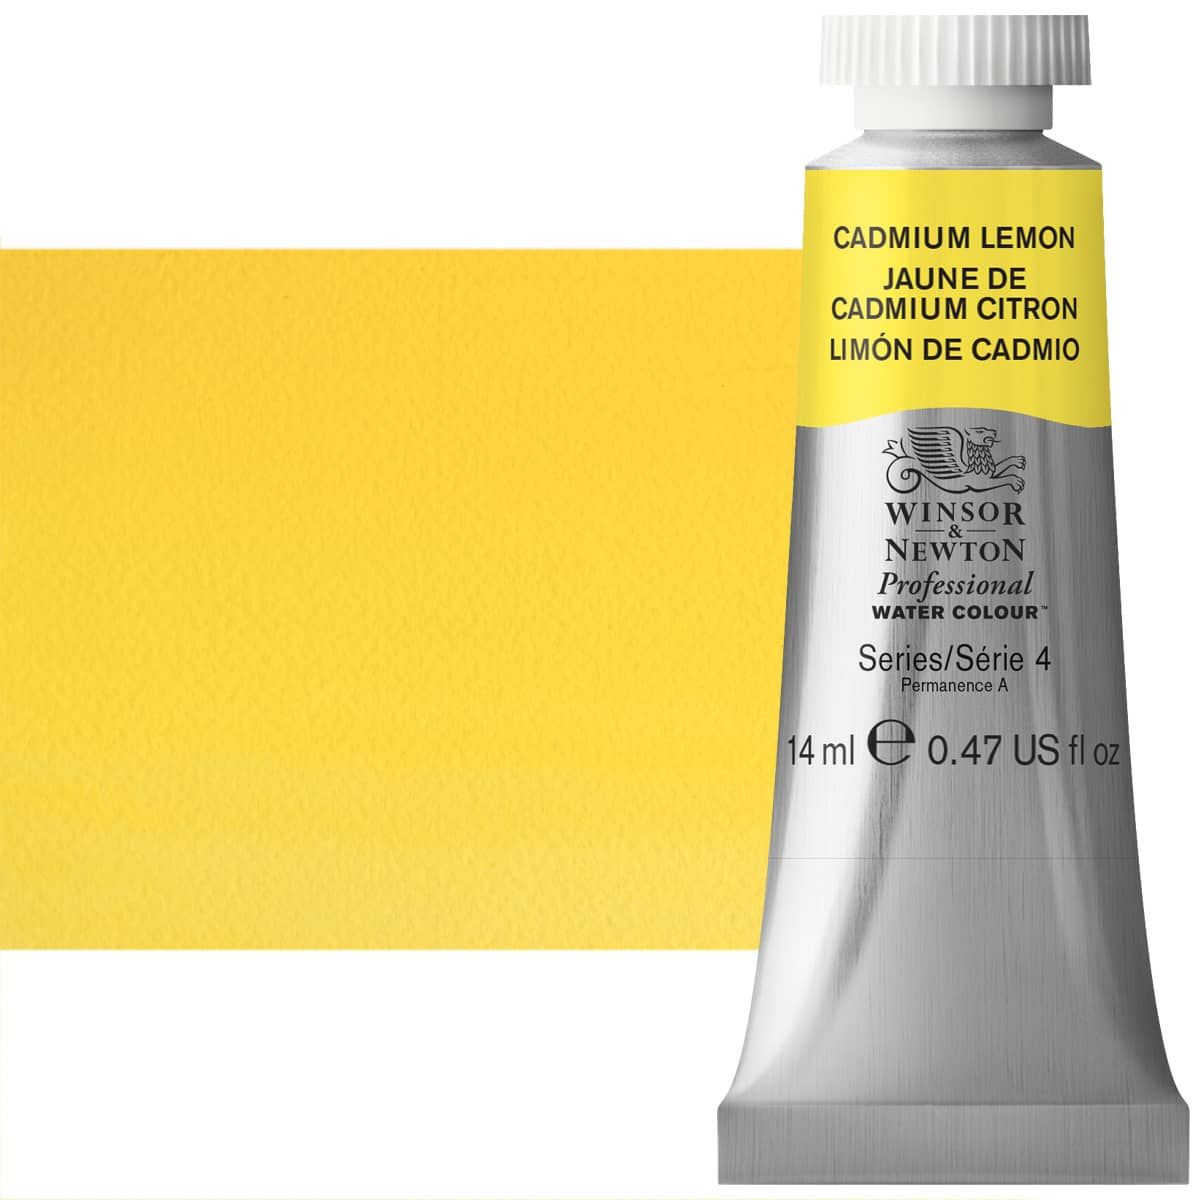 Winsor & Newton Professional Watercolor - Cadmium Lemon, 14ml Tube